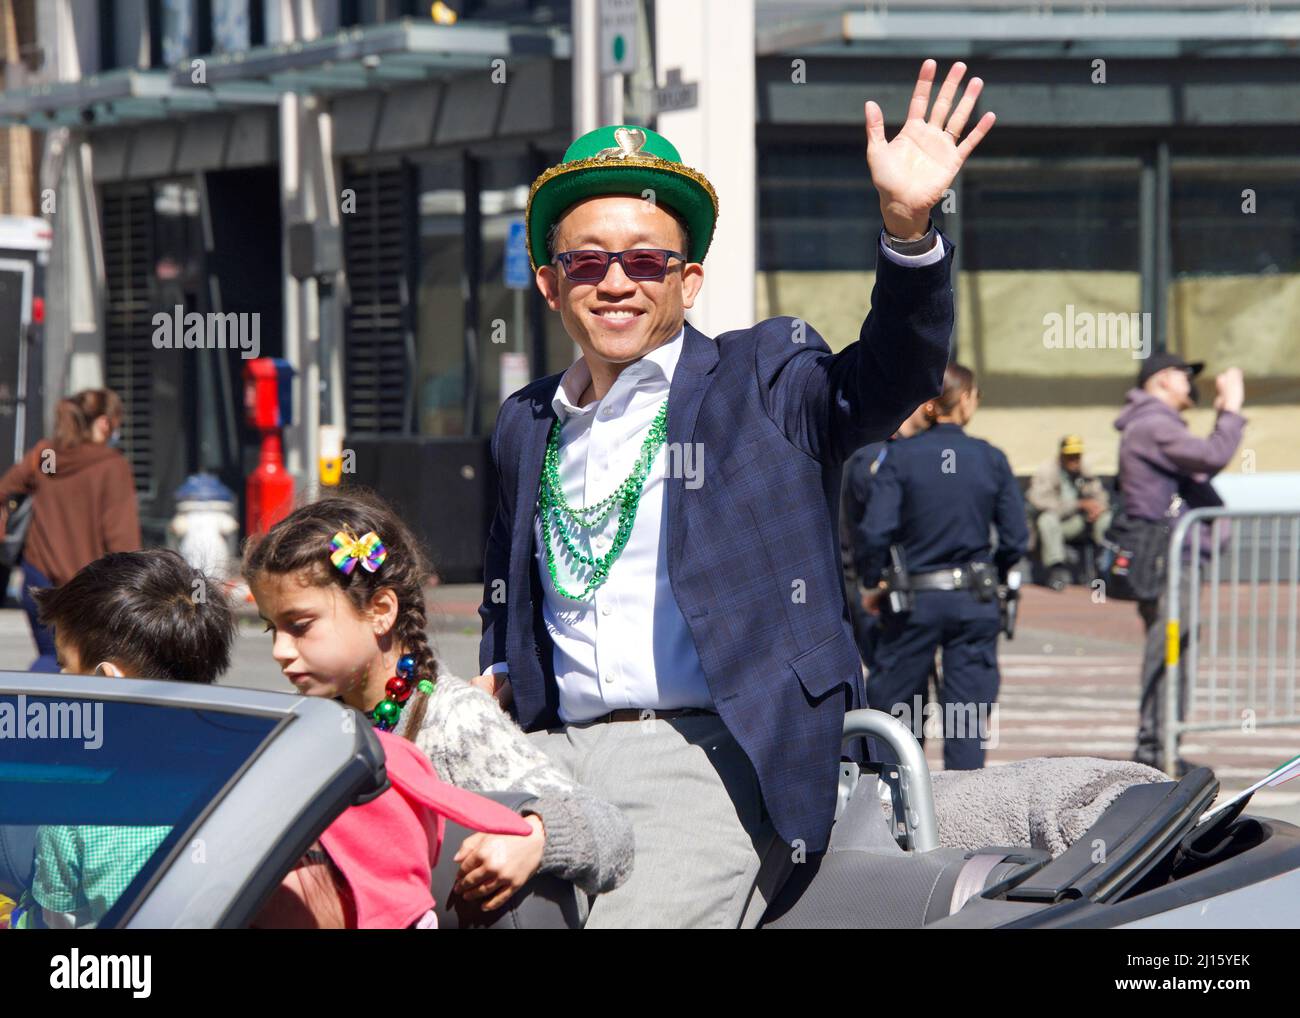 San Francisco, CA - March 12, 2022: San Francisco City Attorney David Chiu in the 2022 Saint Patrick's Day Parade, the West Coast's largest Irish even Stock Photo